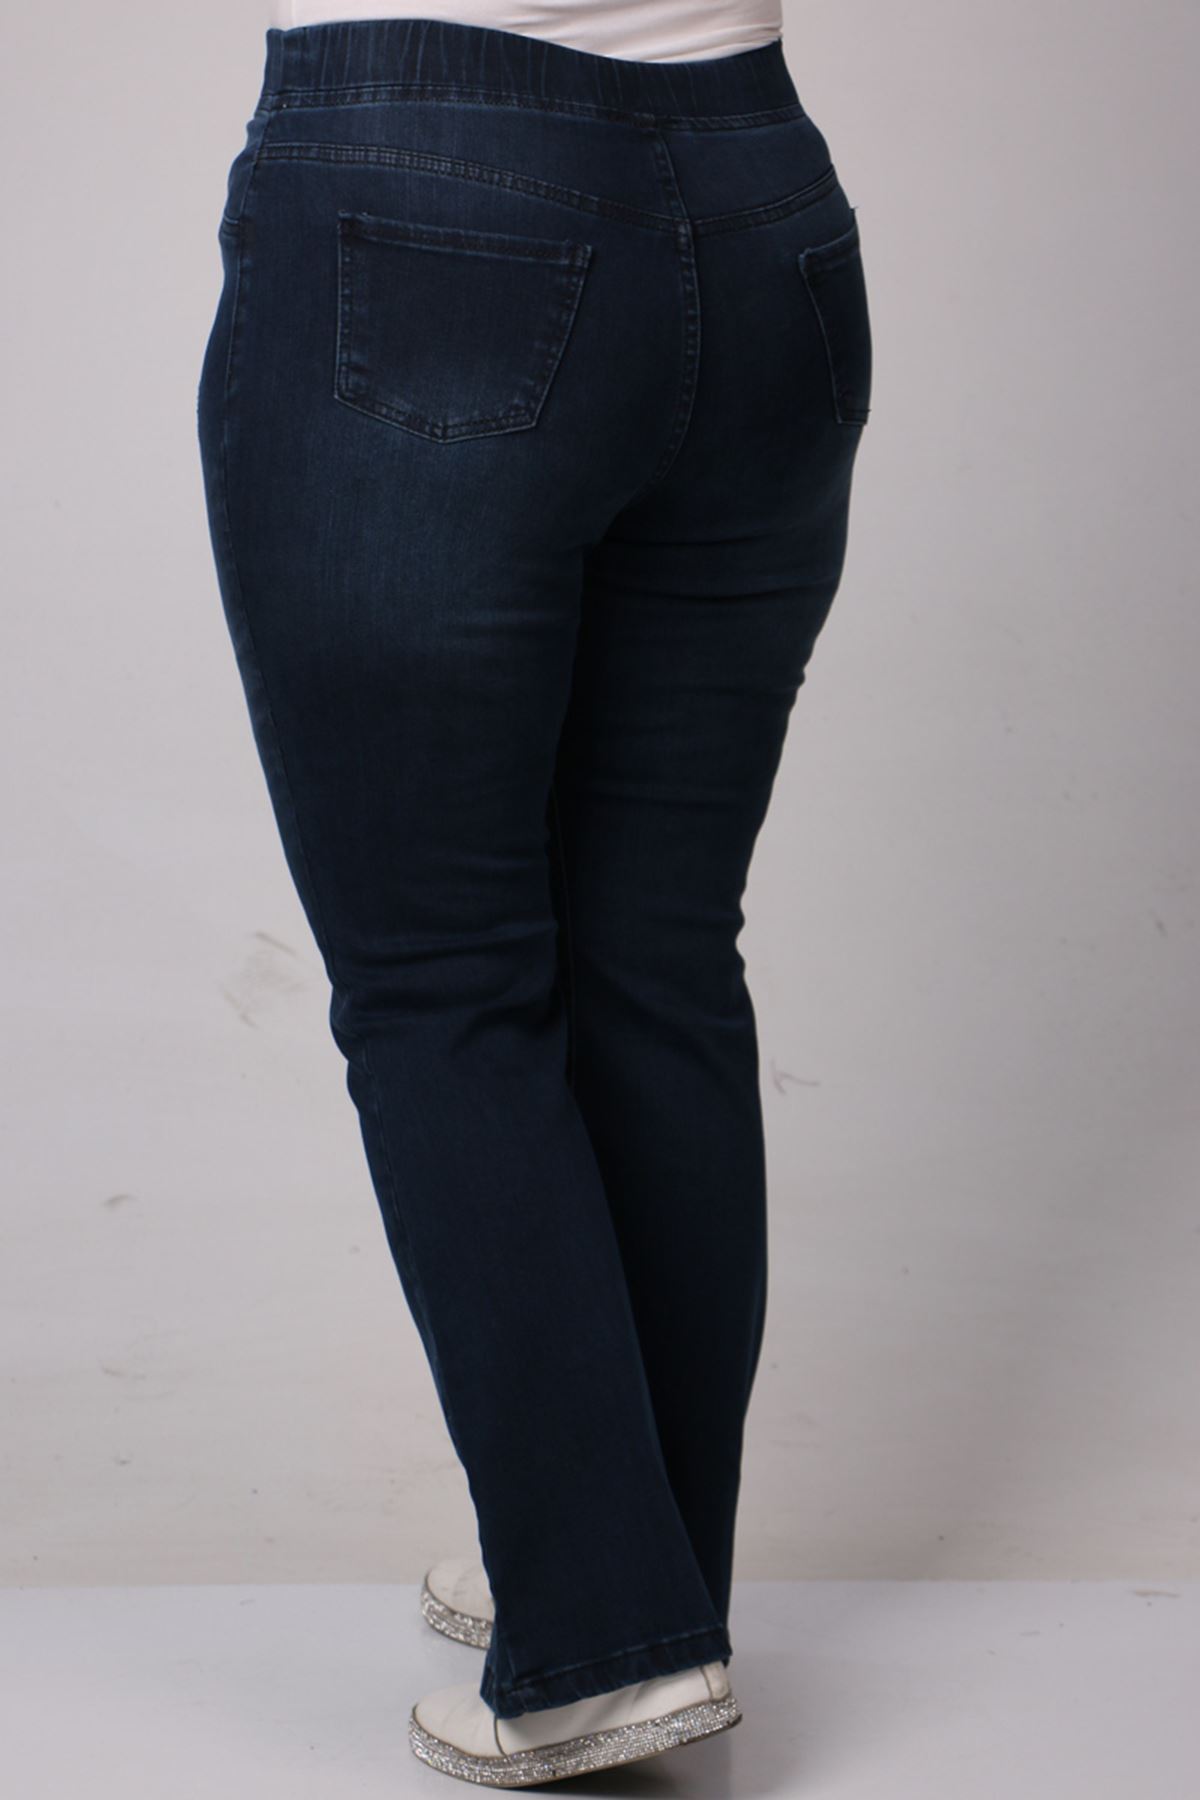 9137 Plus Size Elastic Waist Flared Jeans - Light Blue